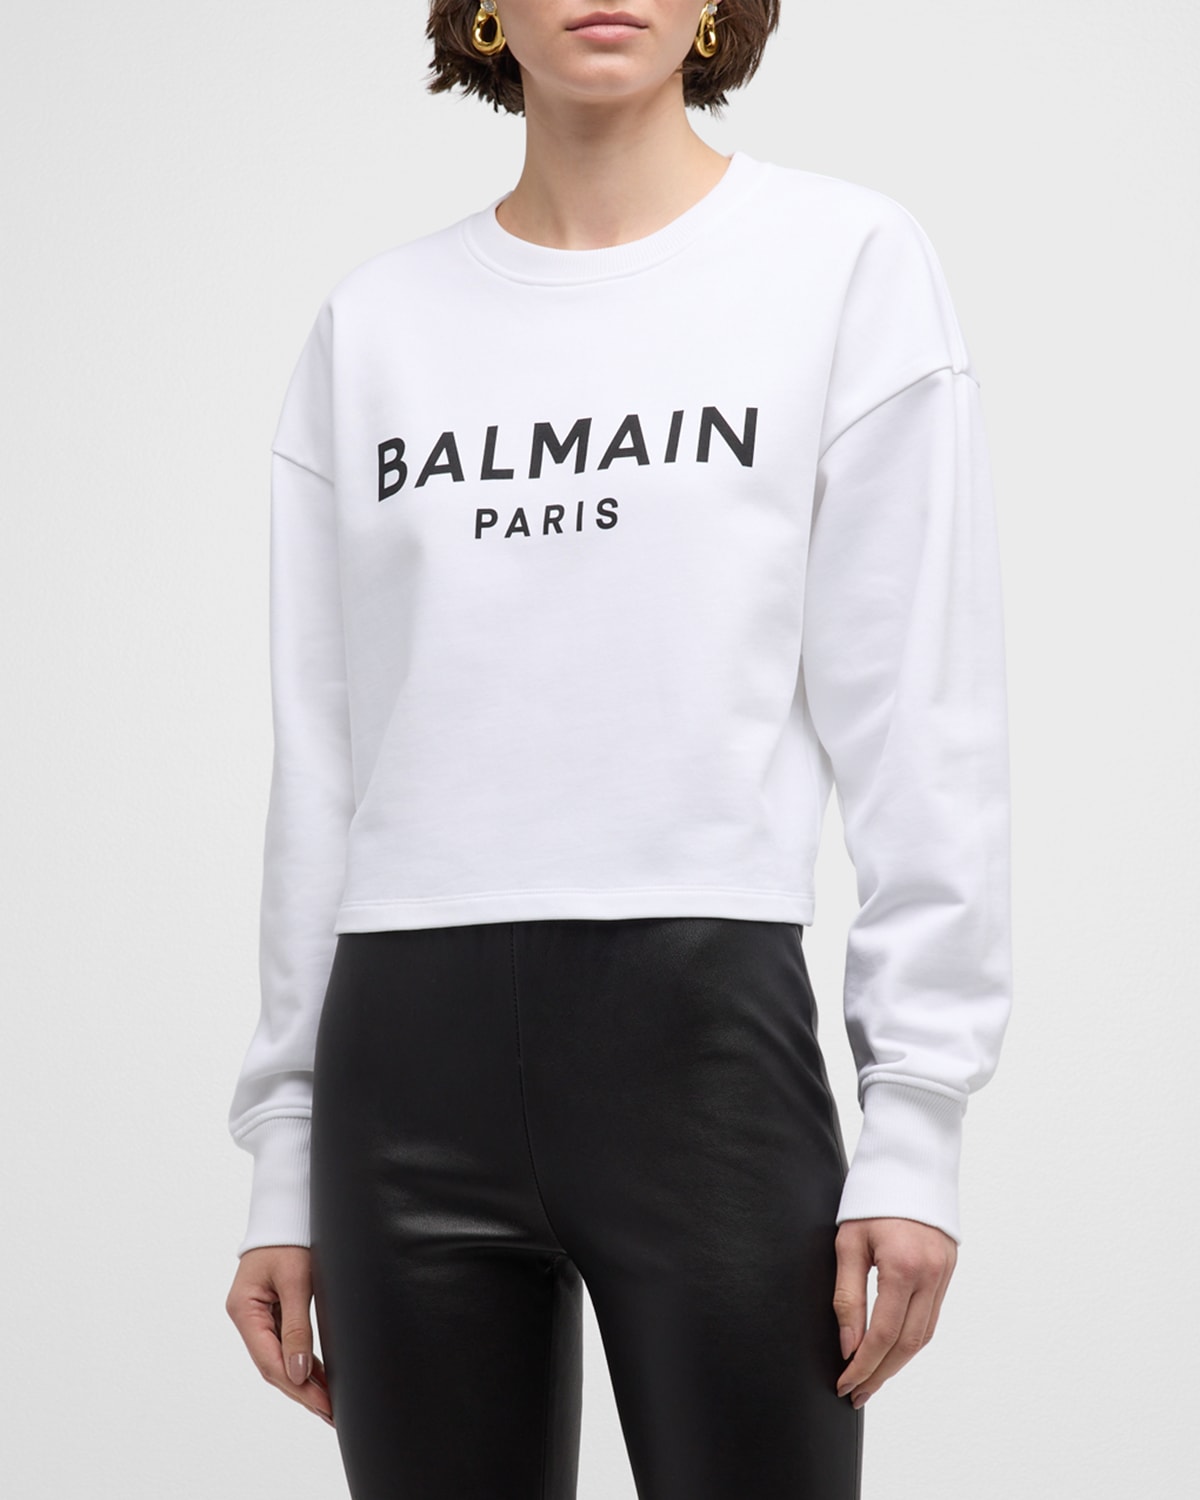 Balmain Logo Bulky Crop Sweatshirt In White/blk